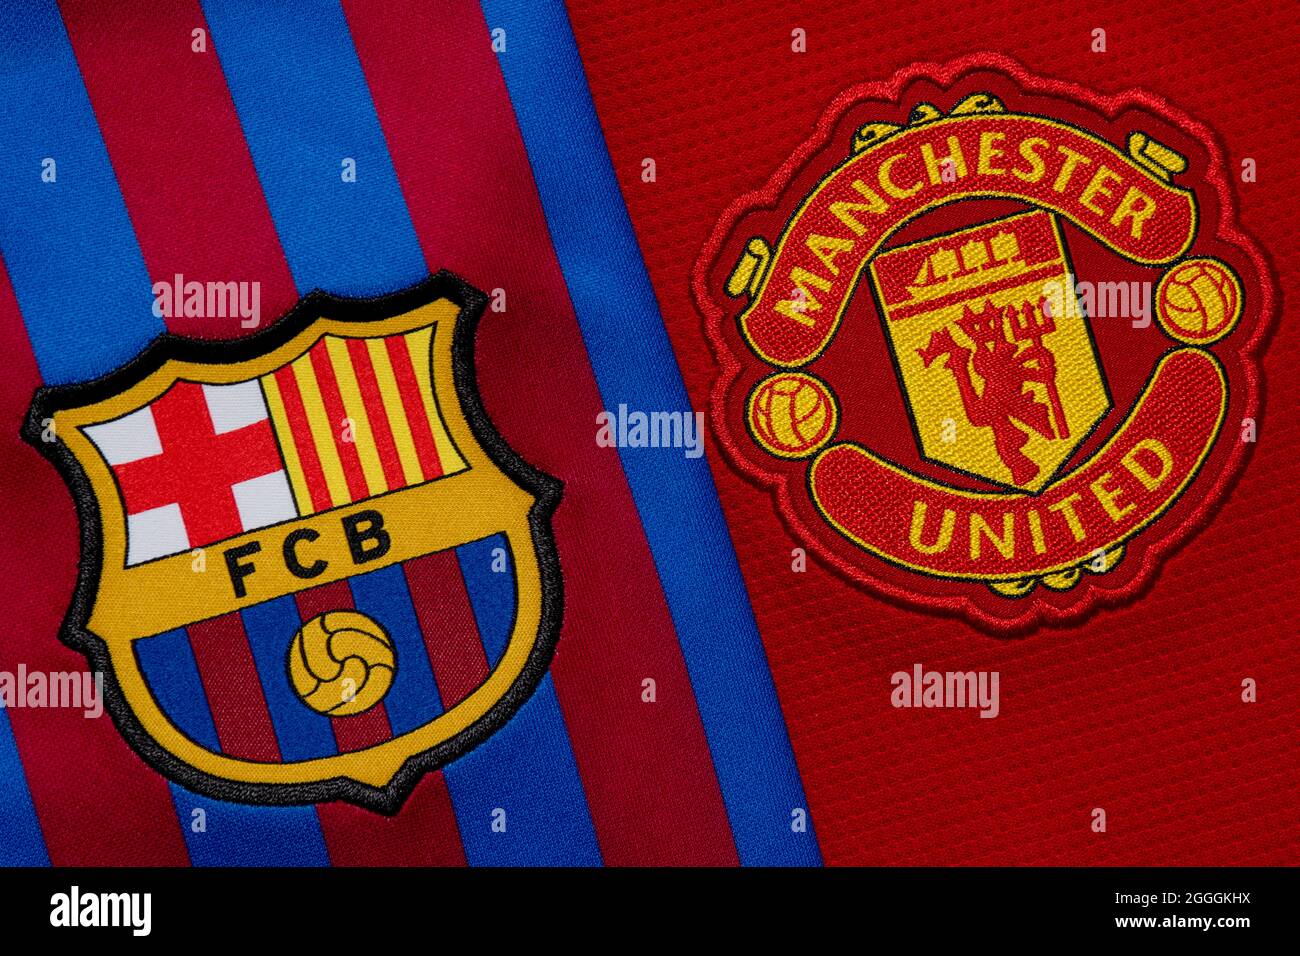 Nahaufnahme des Manchester United & Barcelona Clubwappens. Stockfoto